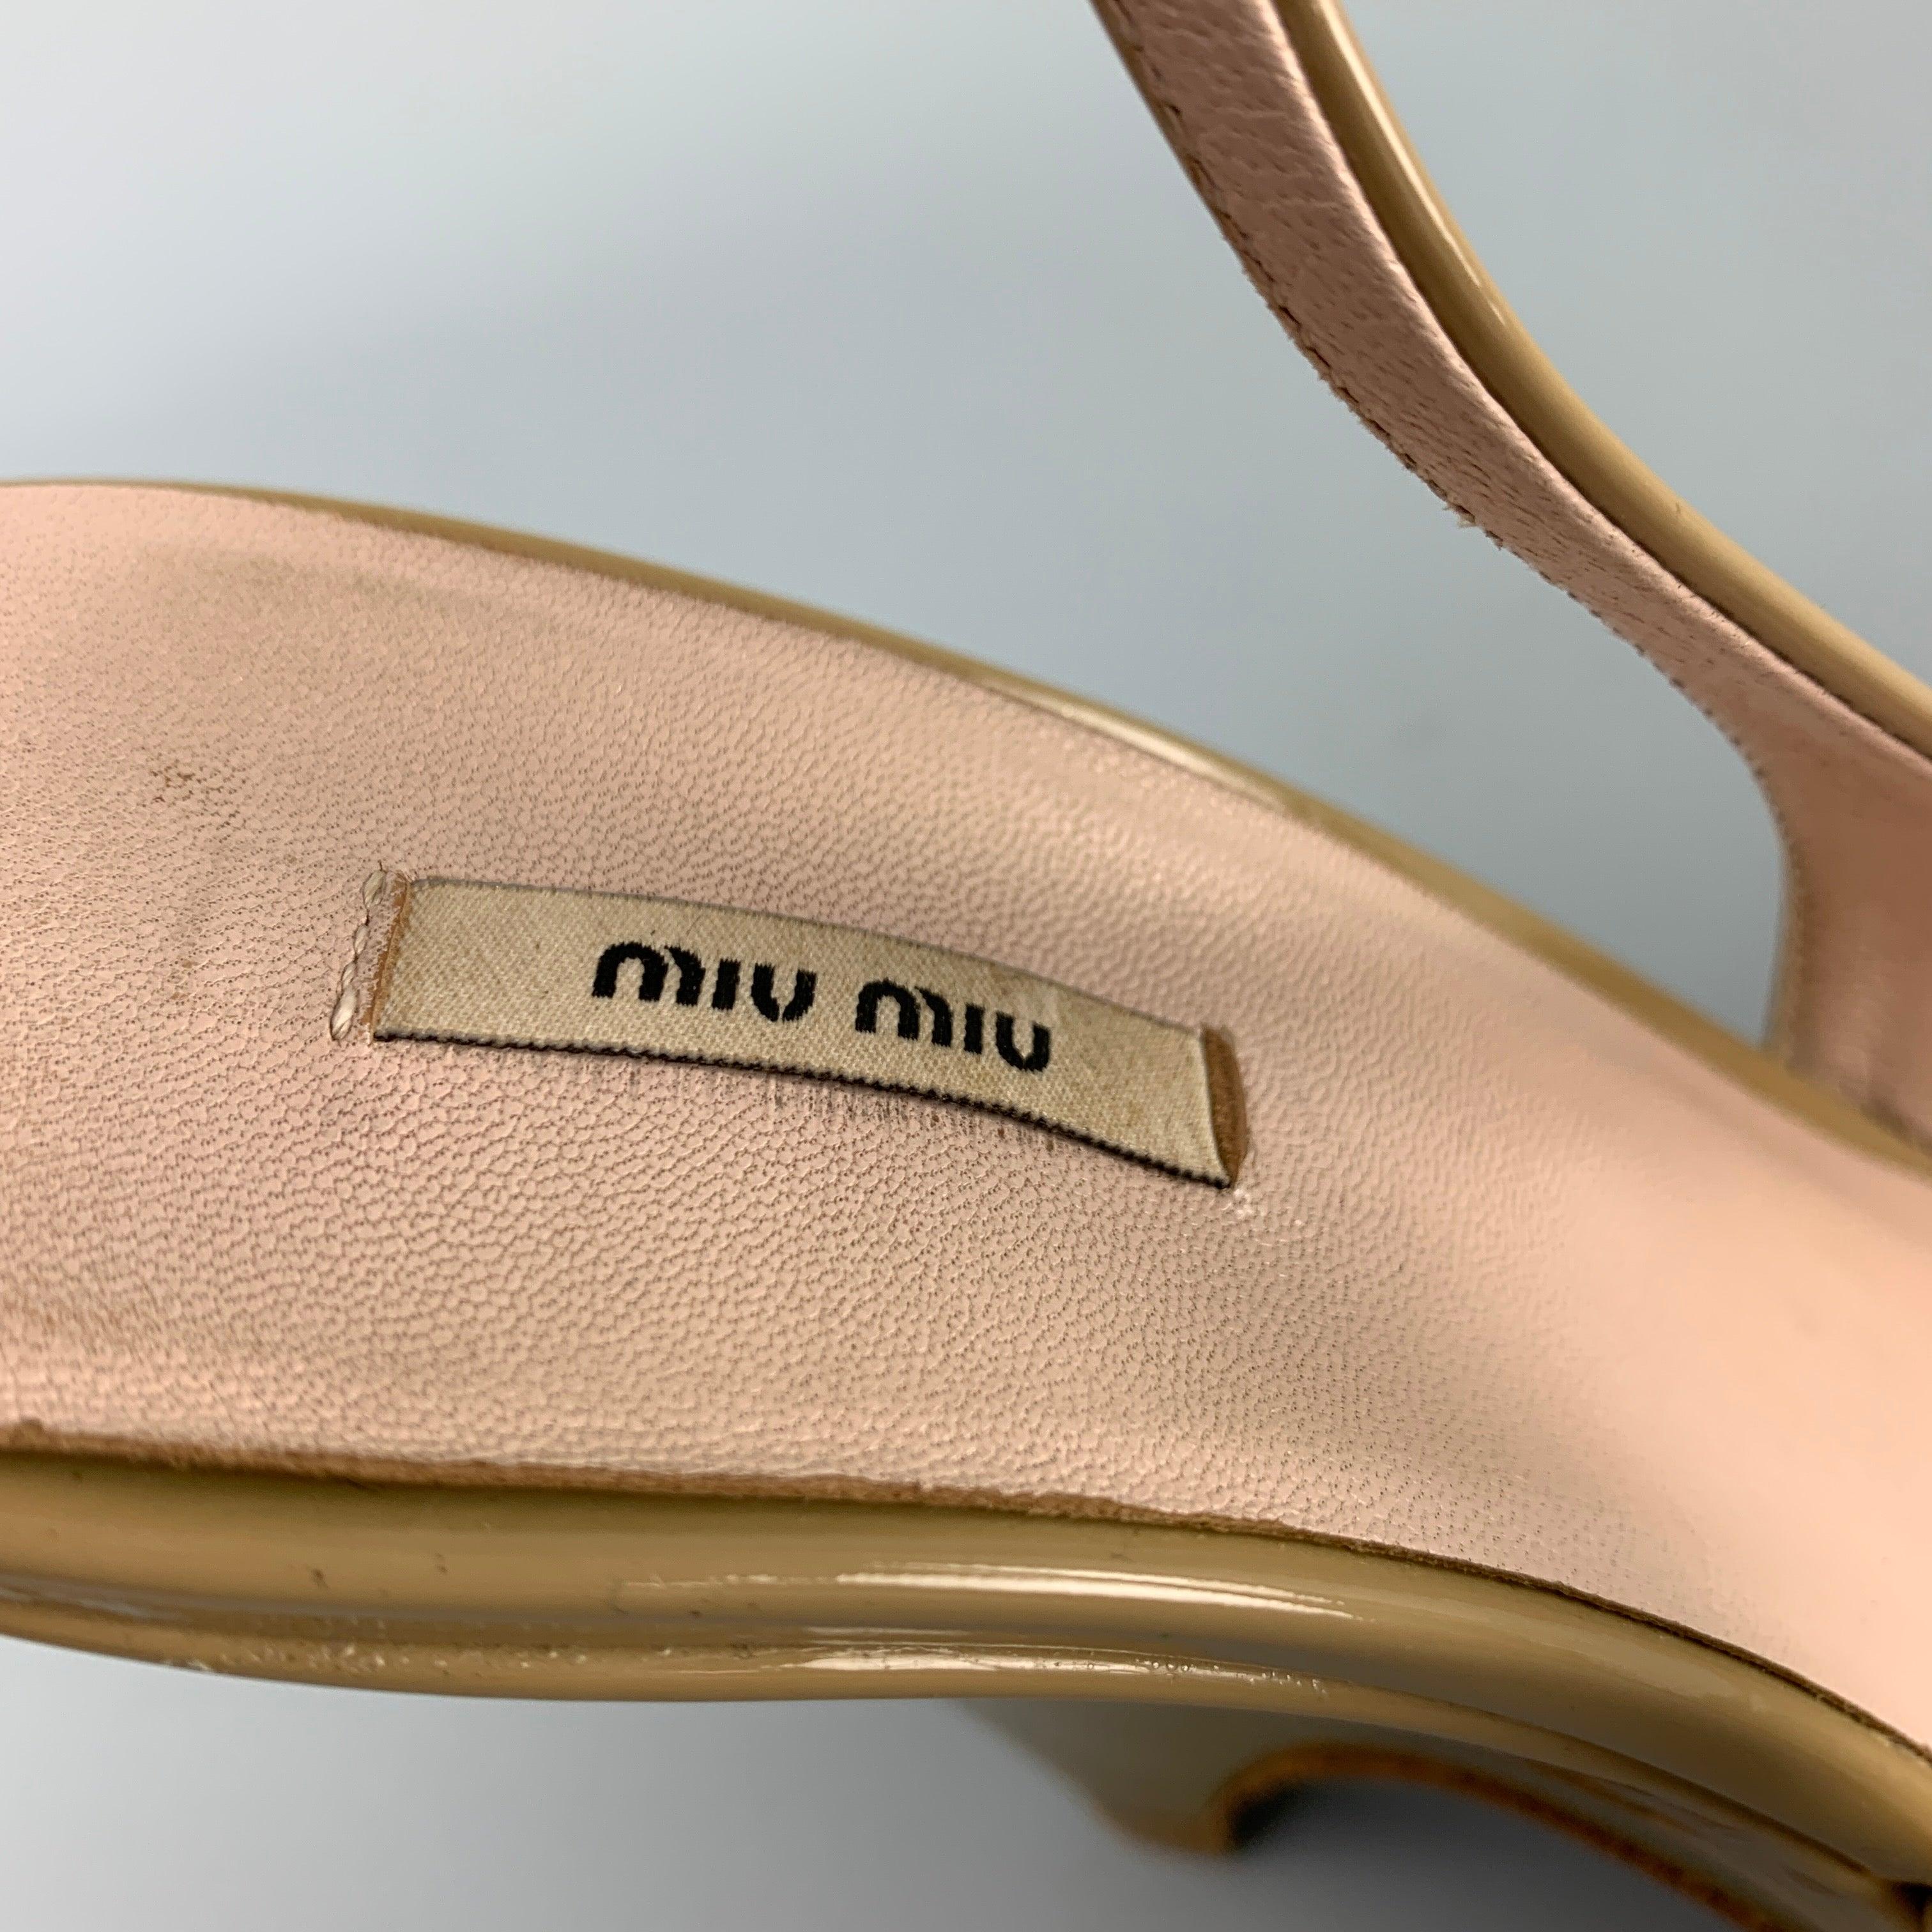 MIU MIU Size 5.5 Beige & Gold Patent Leather Pumps For Sale 2